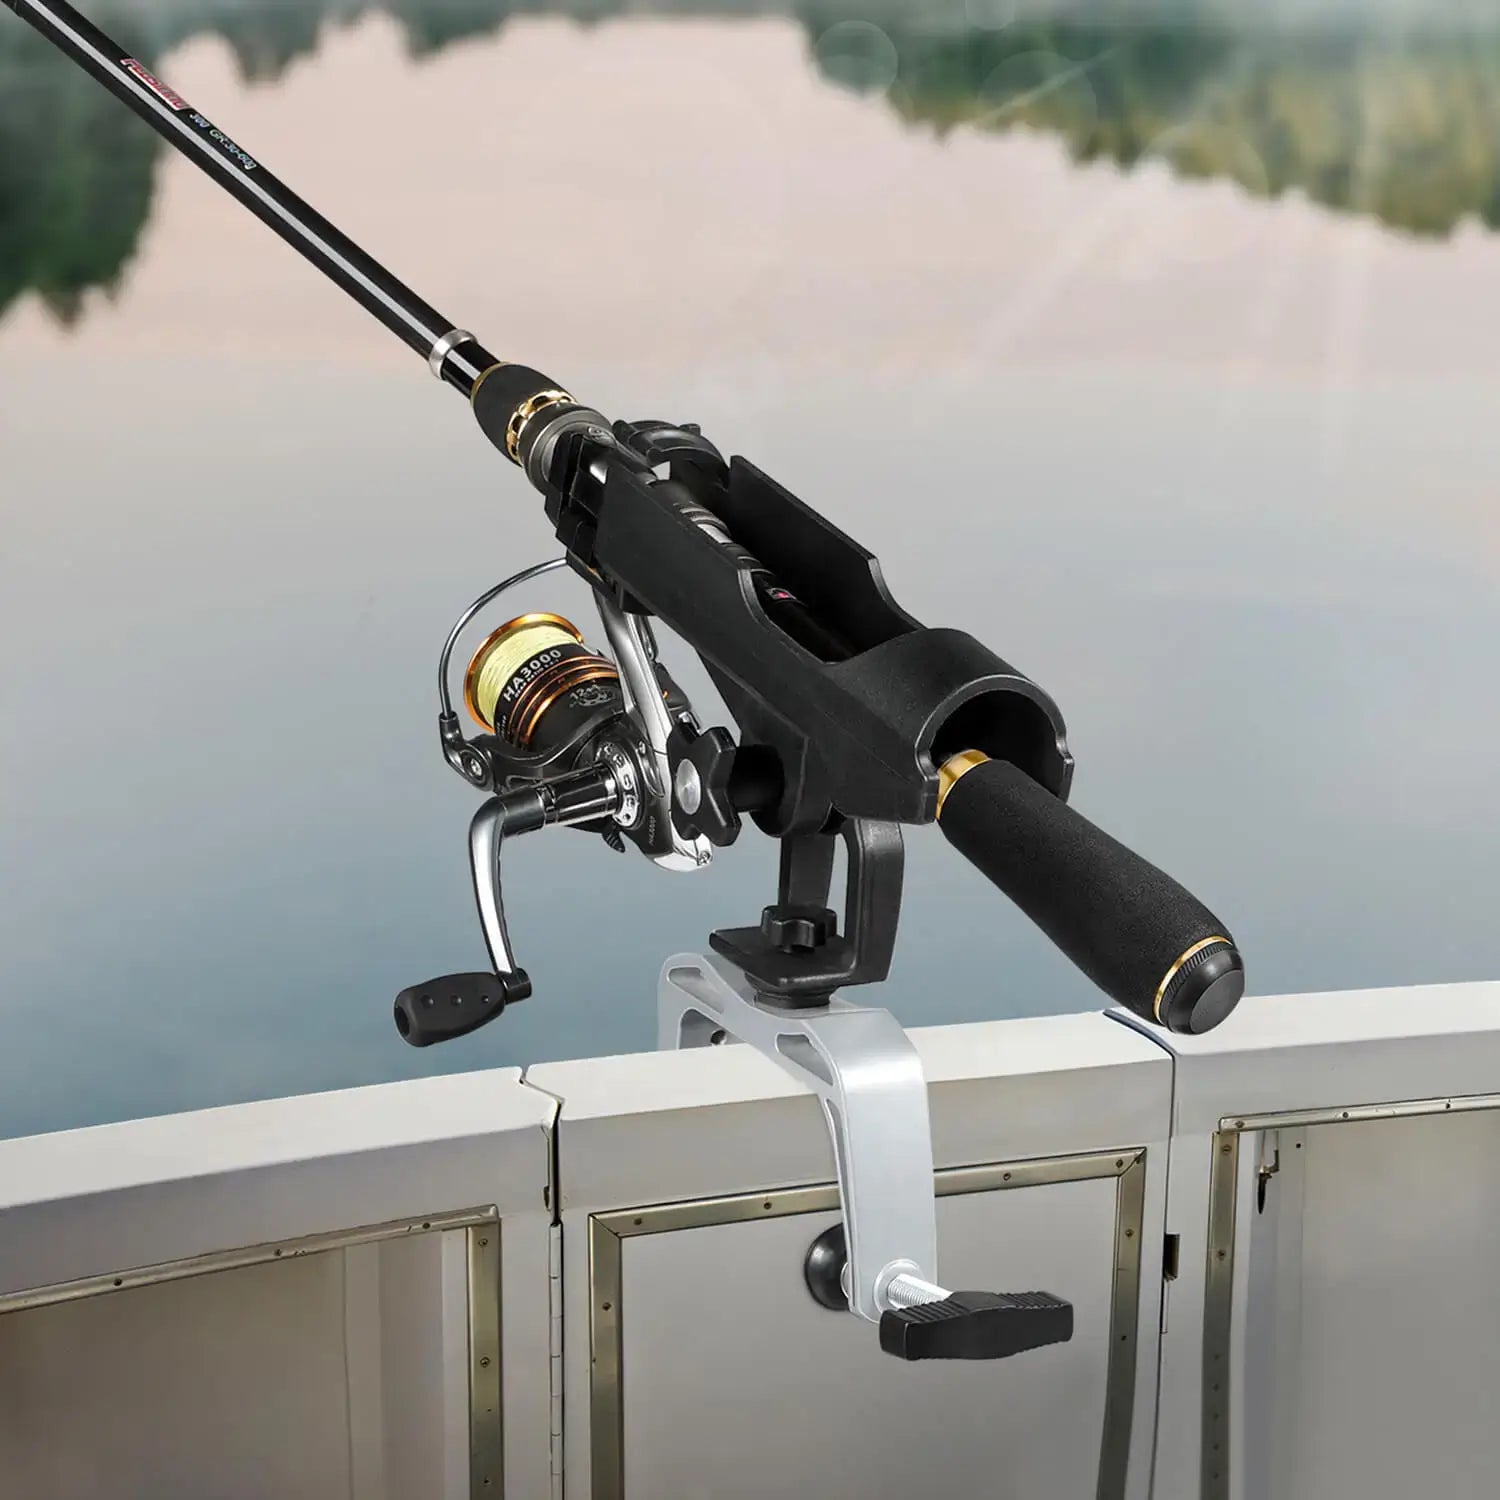 CALANDIS® Fishing Rod Holder Tool Portable Fishing Rod Rack Stand